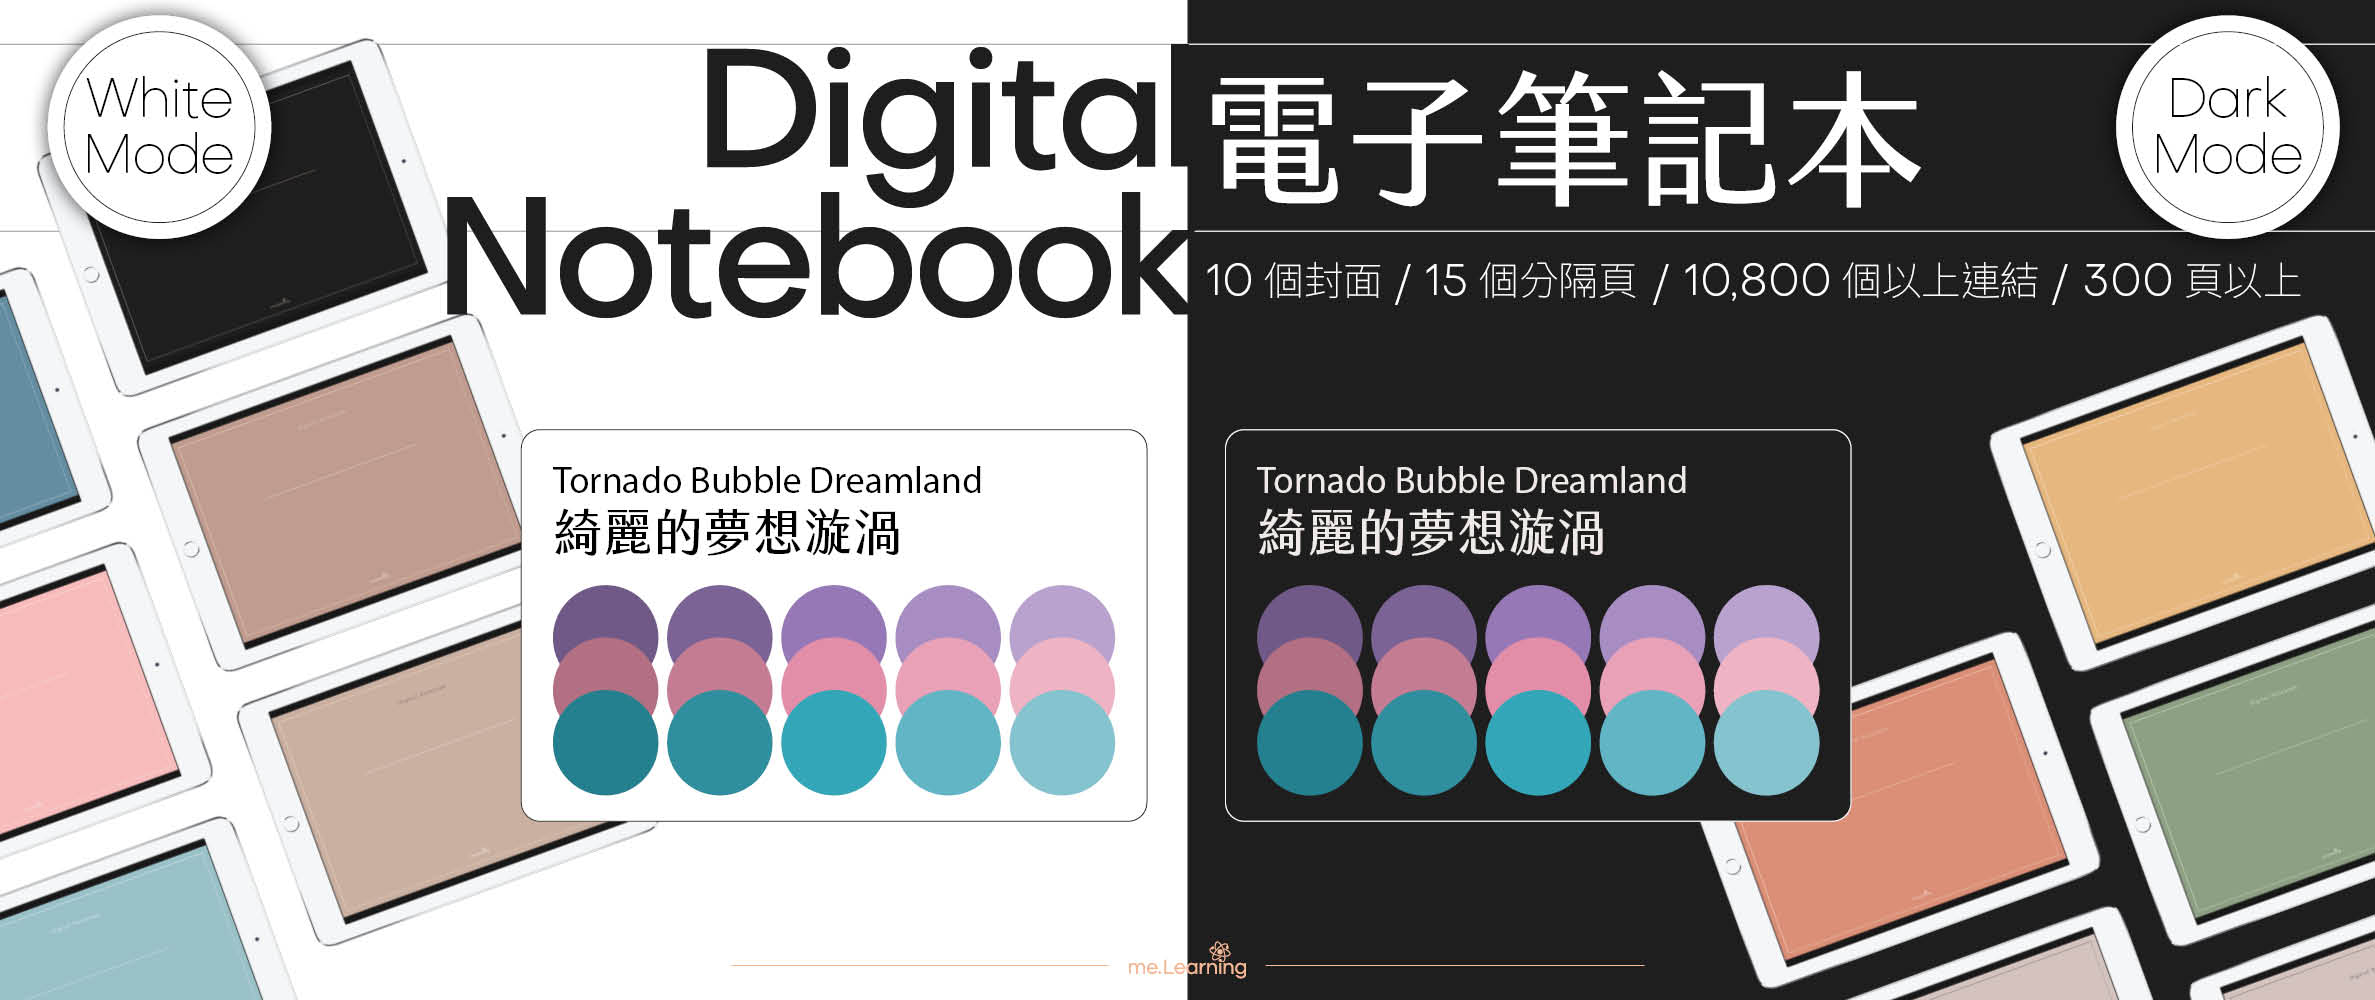 Notebook-Landscape-Solid Color Cover-15 Tabs-Tornado Bubble Dreamland-Dark Mode 不想念書時上市 | me.Learning